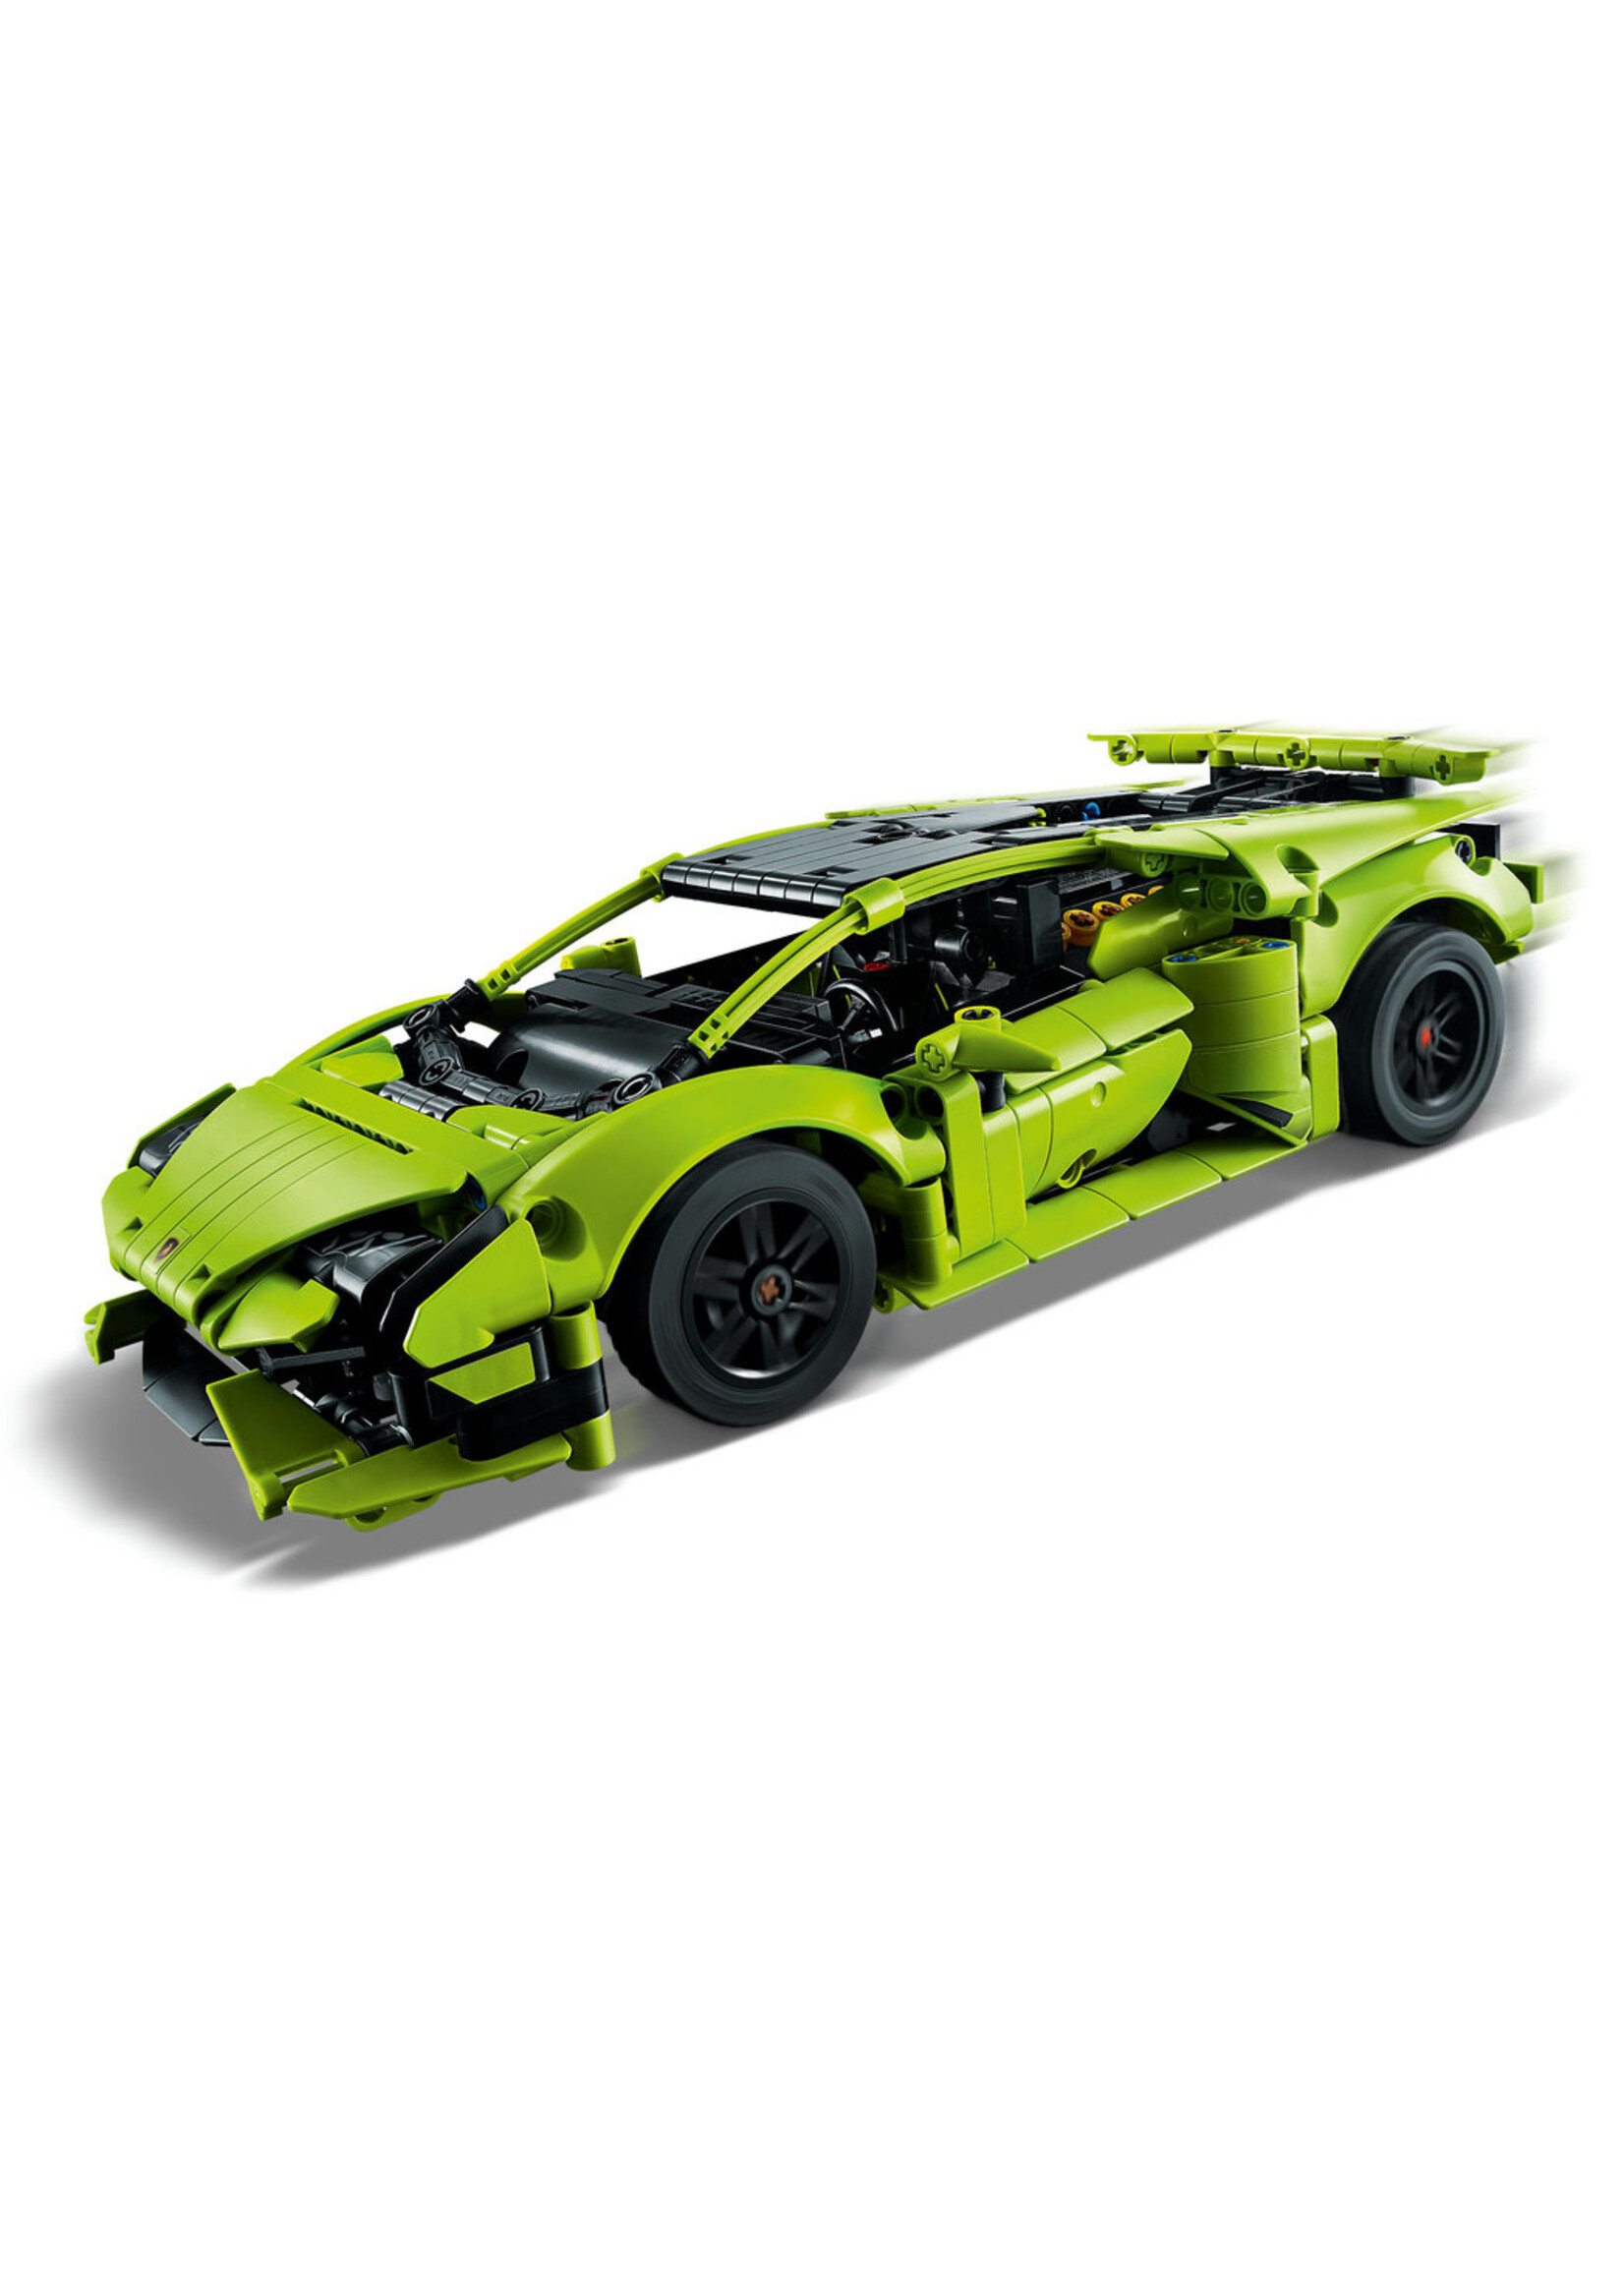 LEGO 42161 - Lamborghini Huracan Tecnica